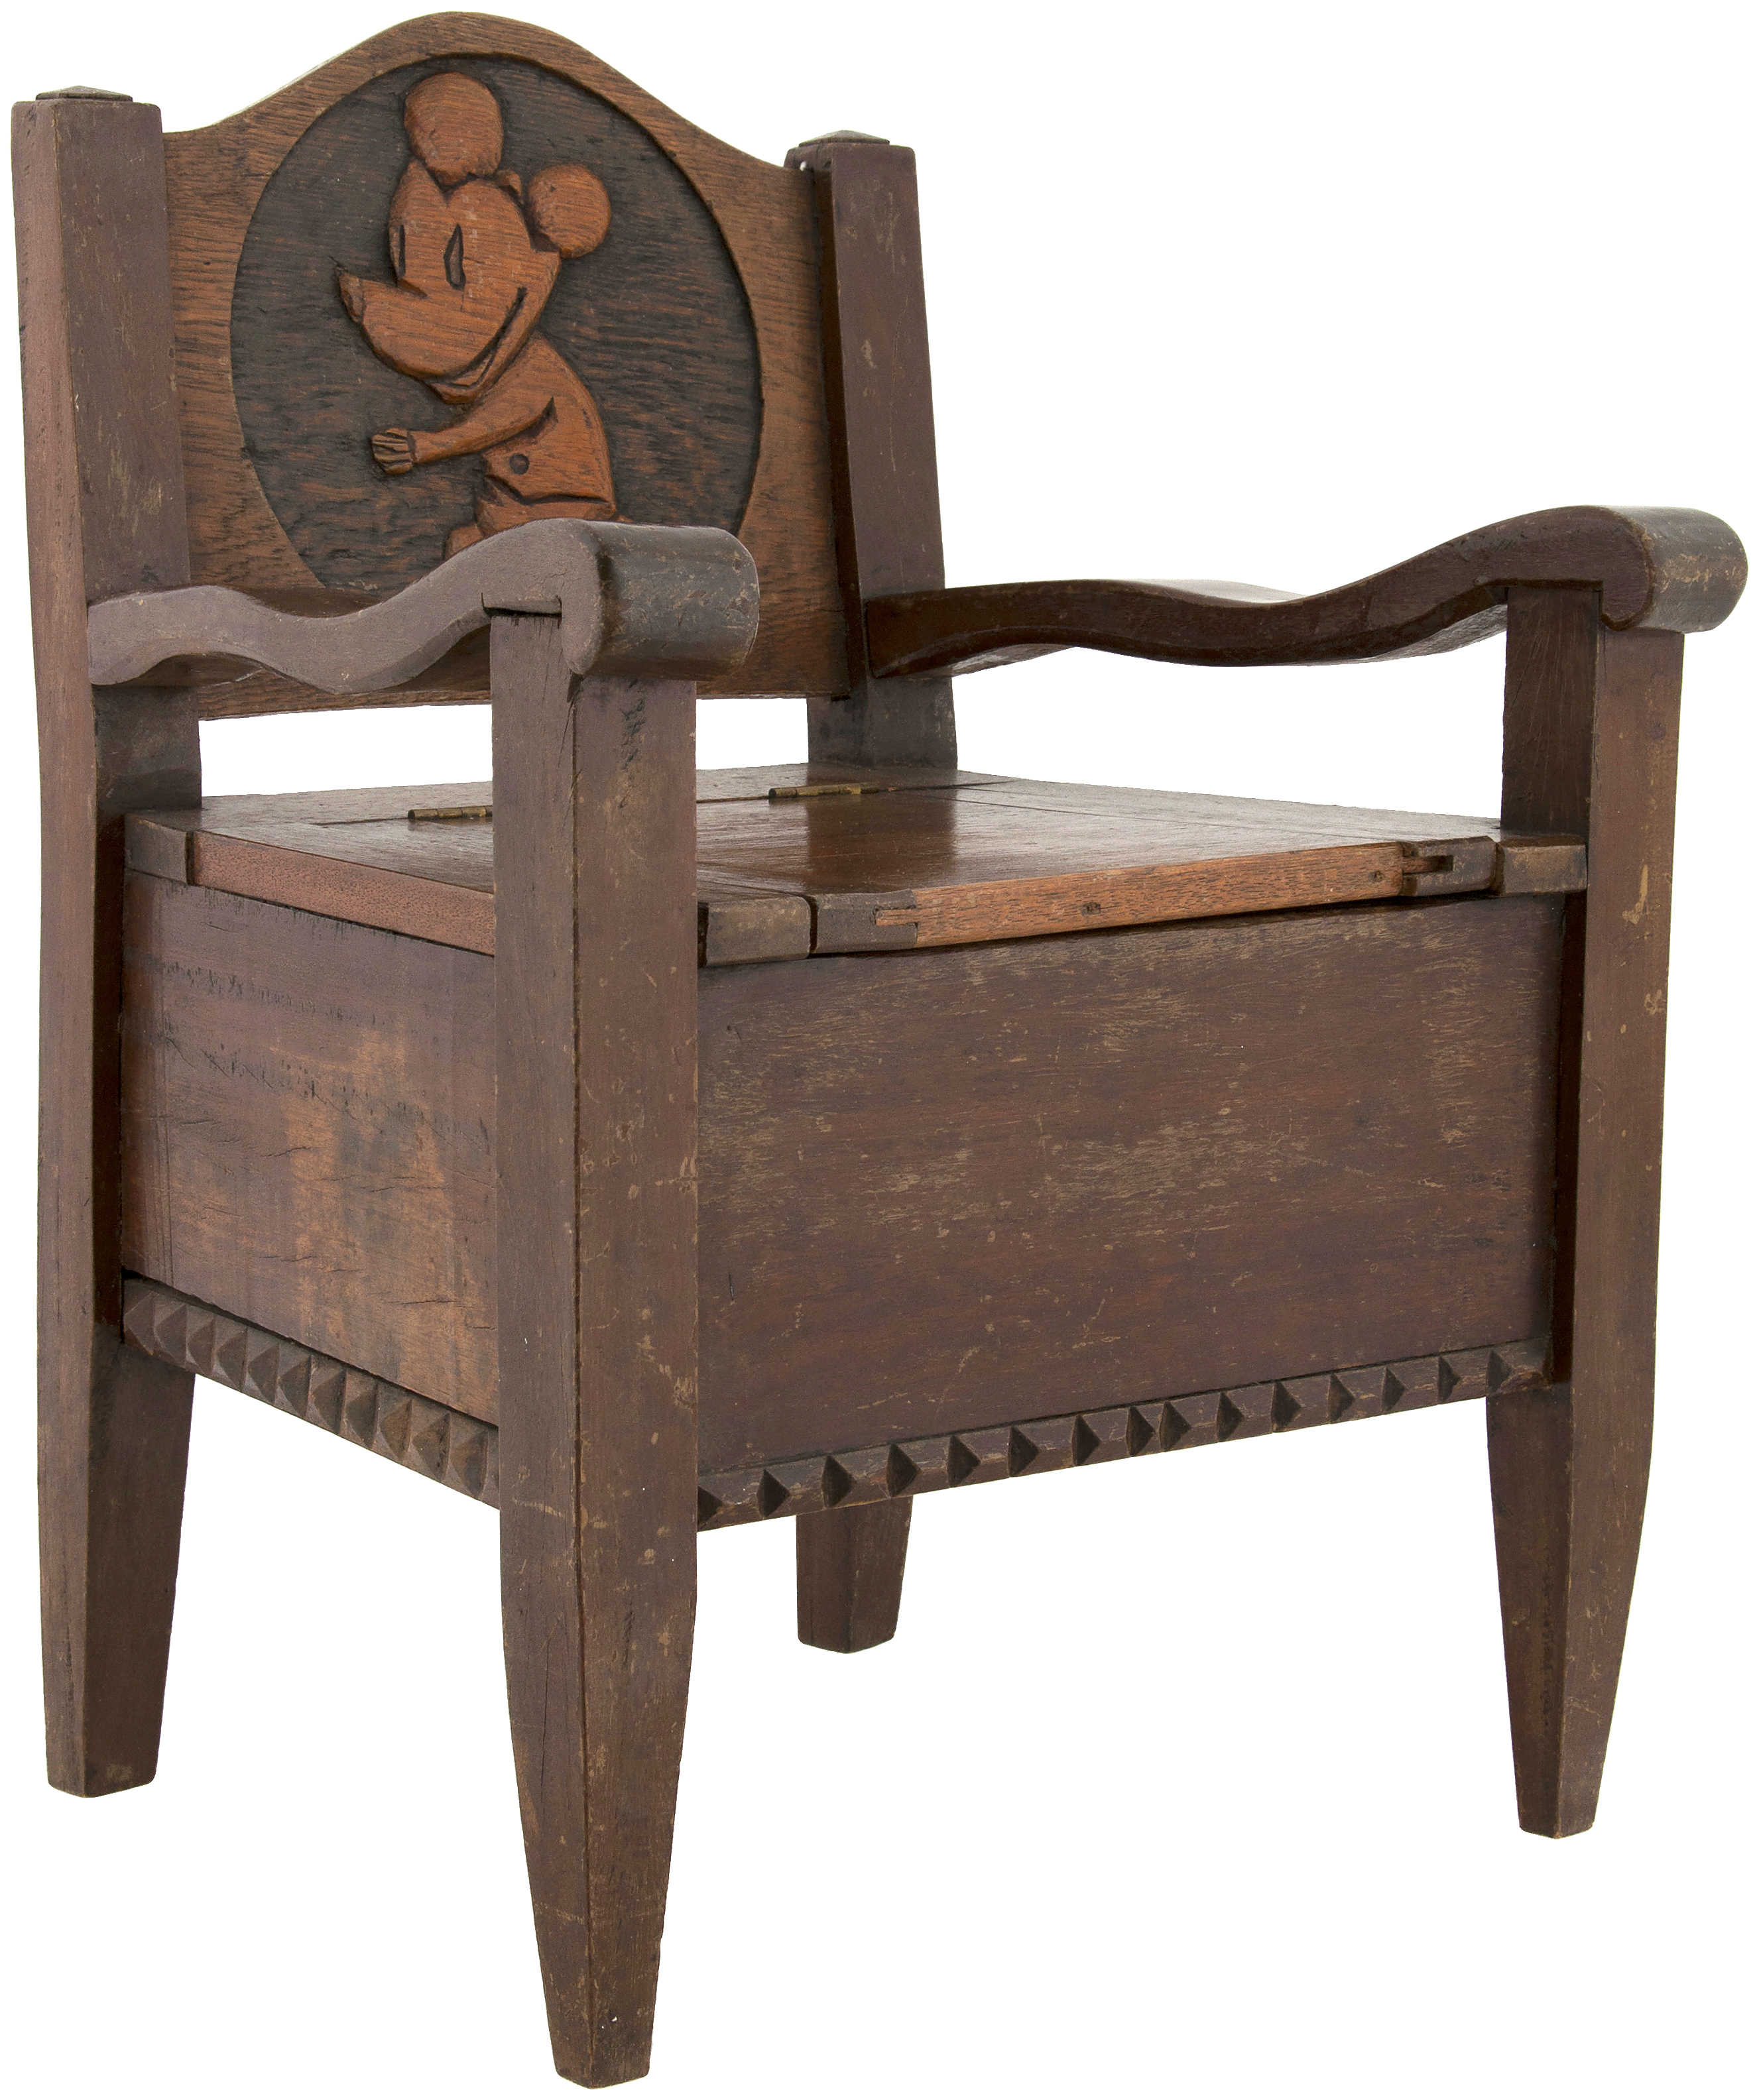 Lilo and Stitch Chair 